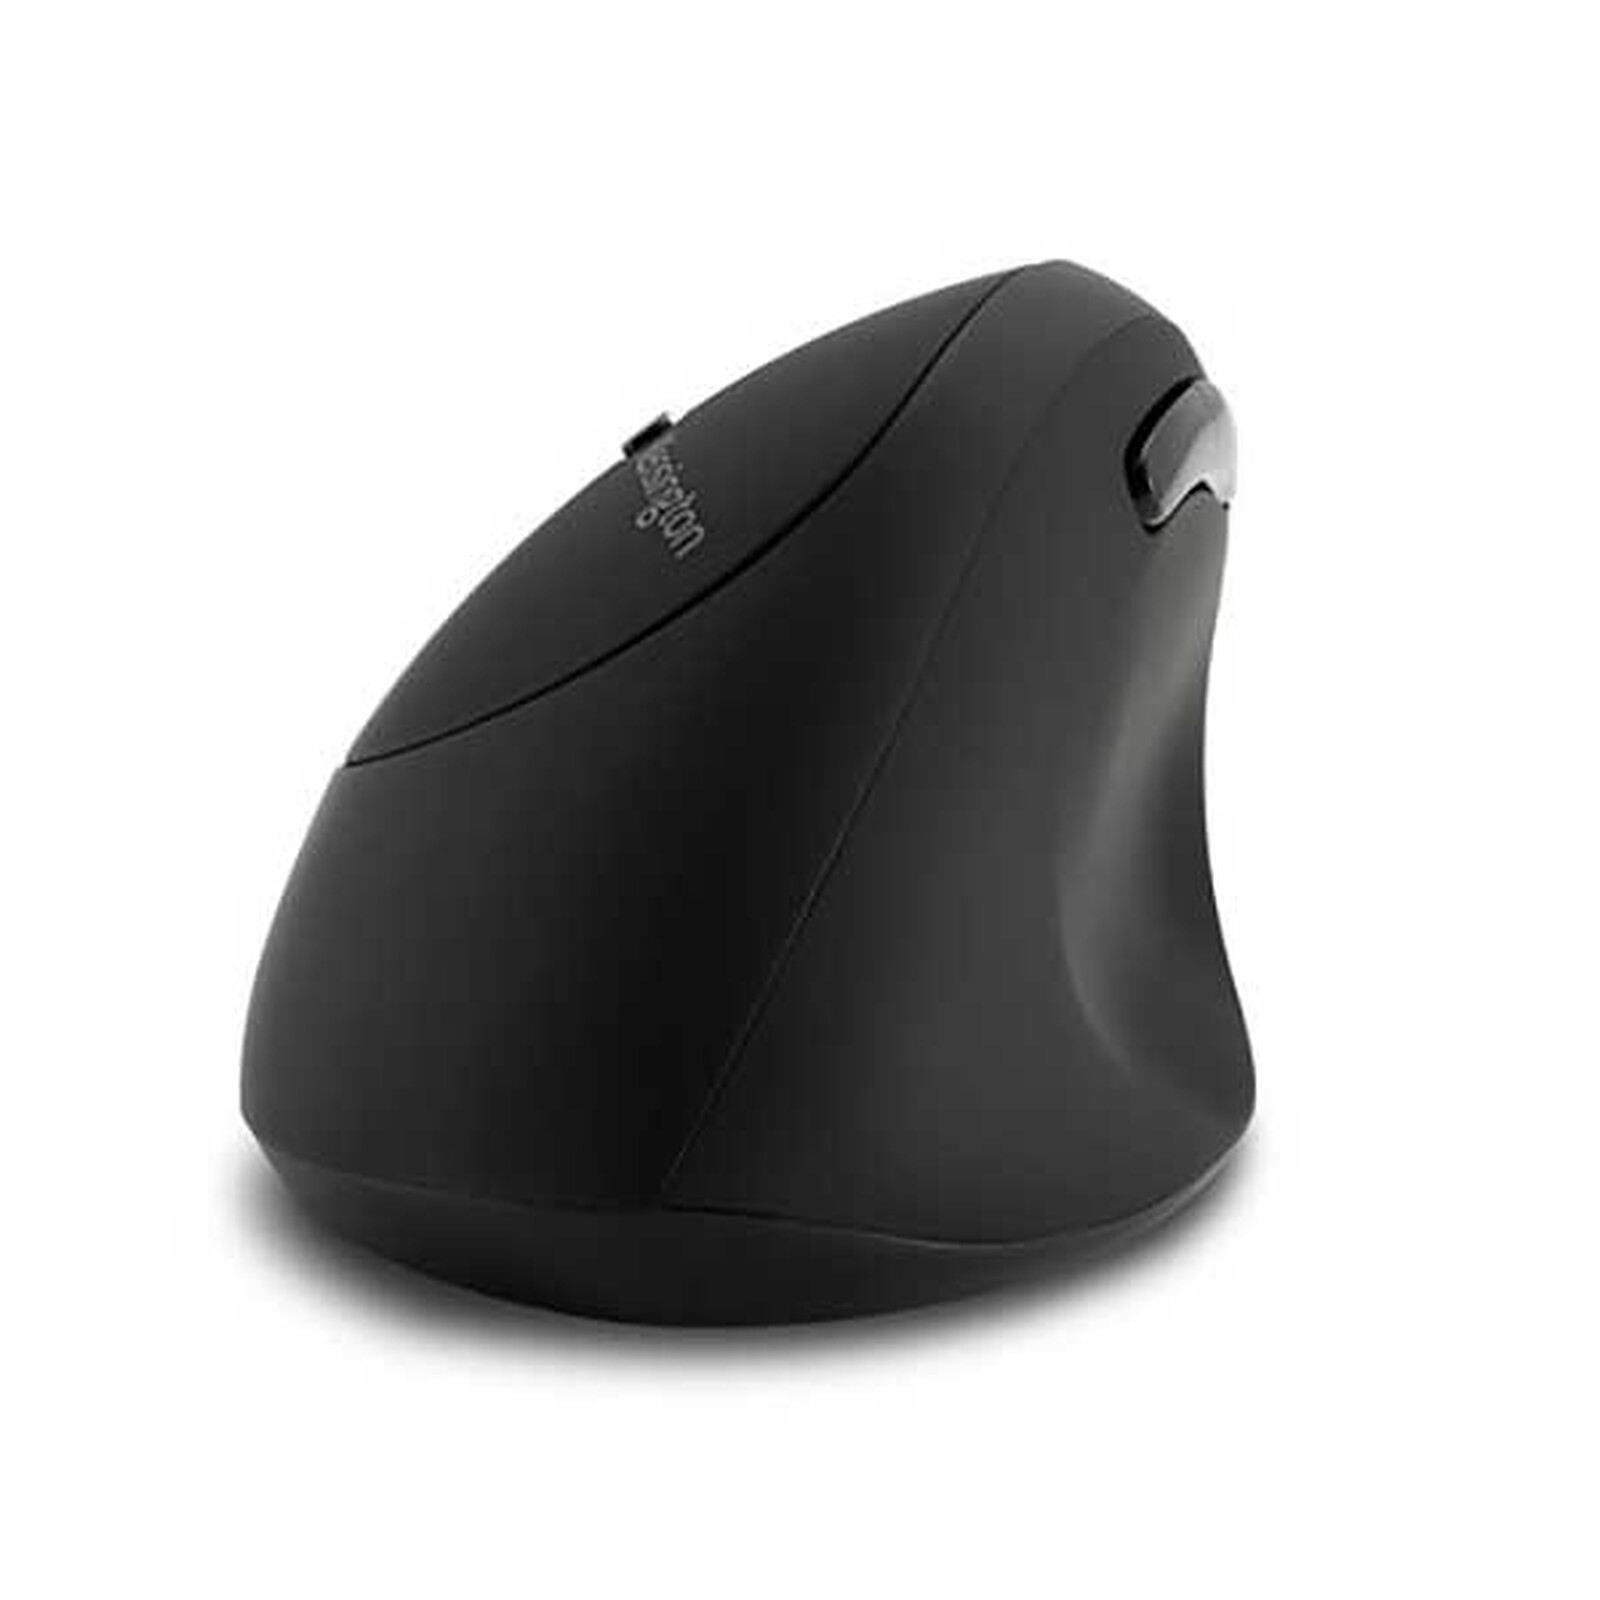 Kensington Pro Fit Wireless Mouse ergonomico per mancini - Mouse